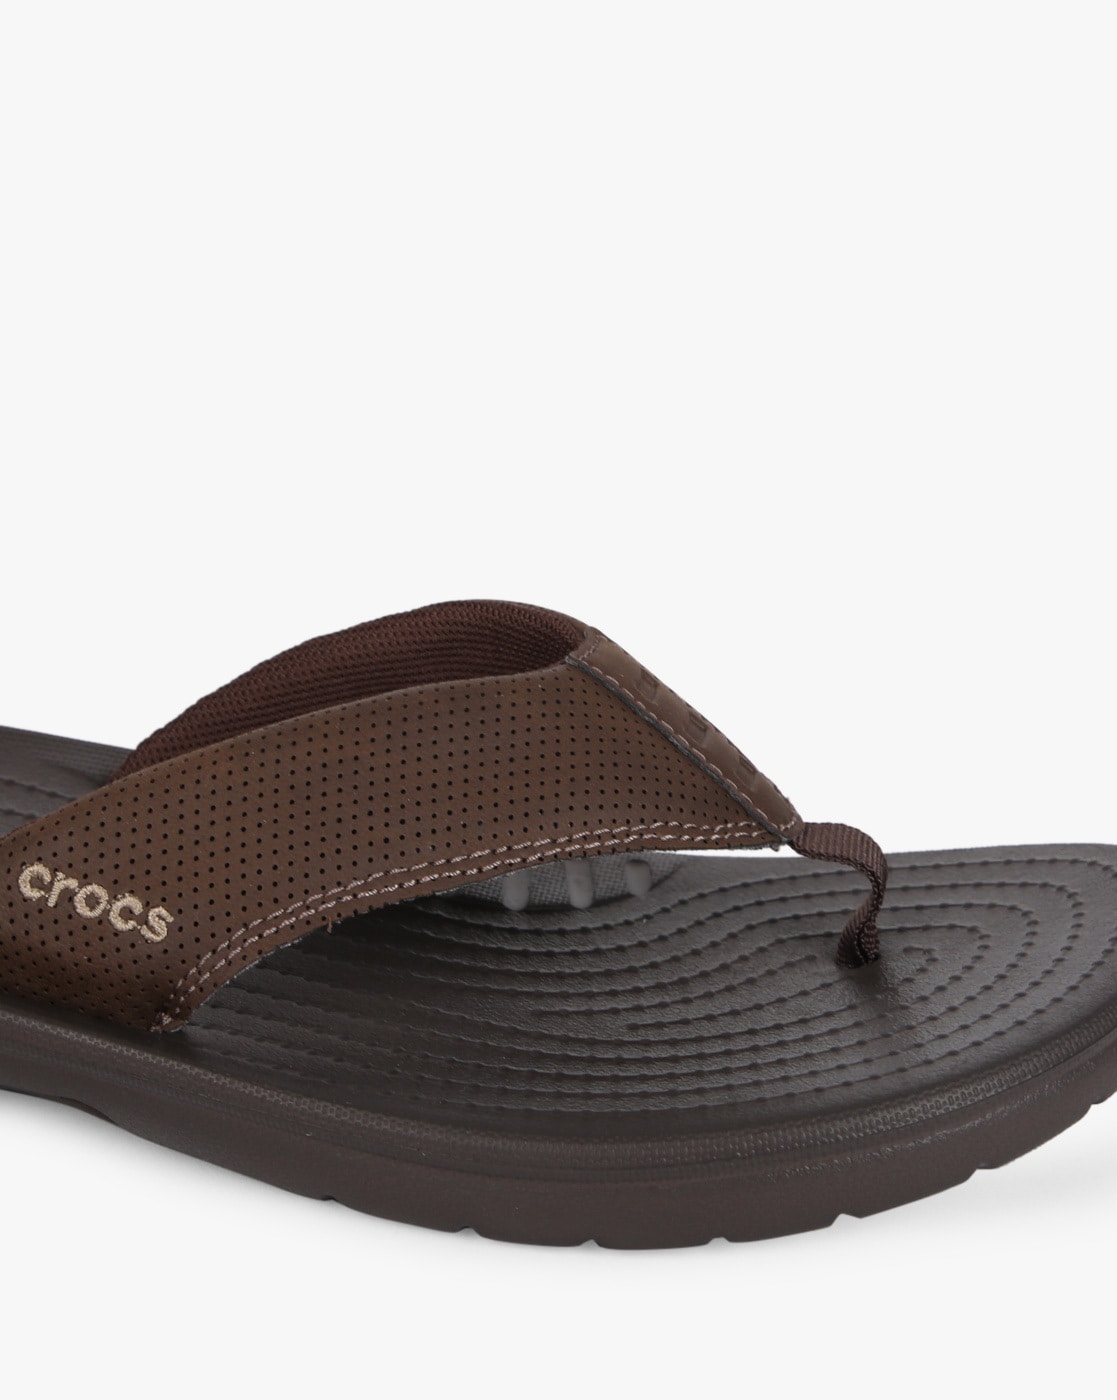 crocs bogota flip flops